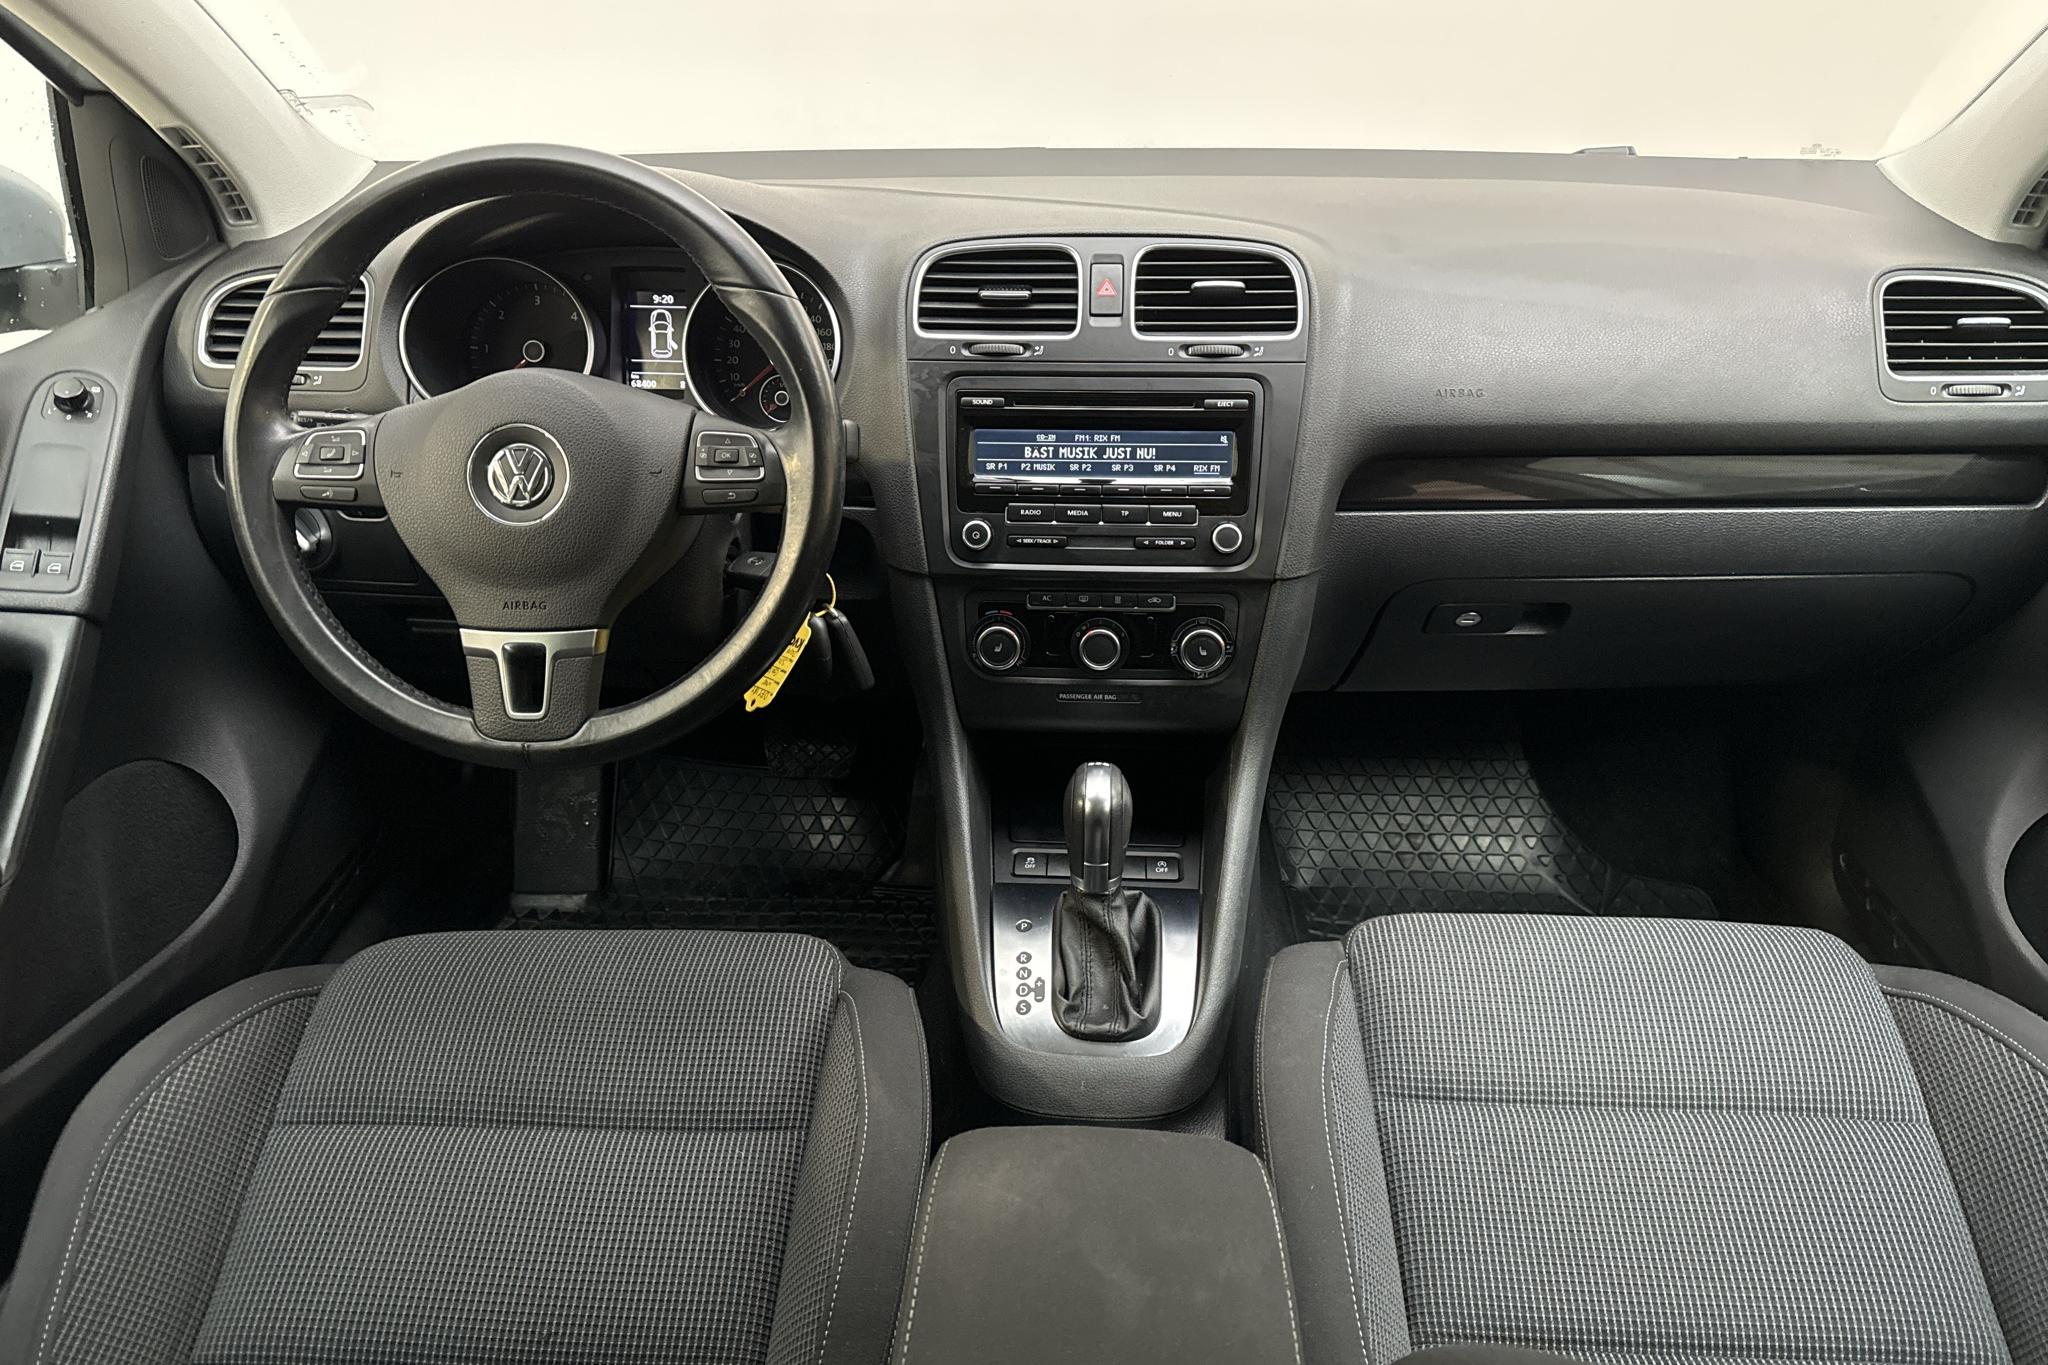 VW Golf VI 1.6 TDI BlueMotion Technology 5dr (105hk) - 6 839 mil - Automat - silver - 2012